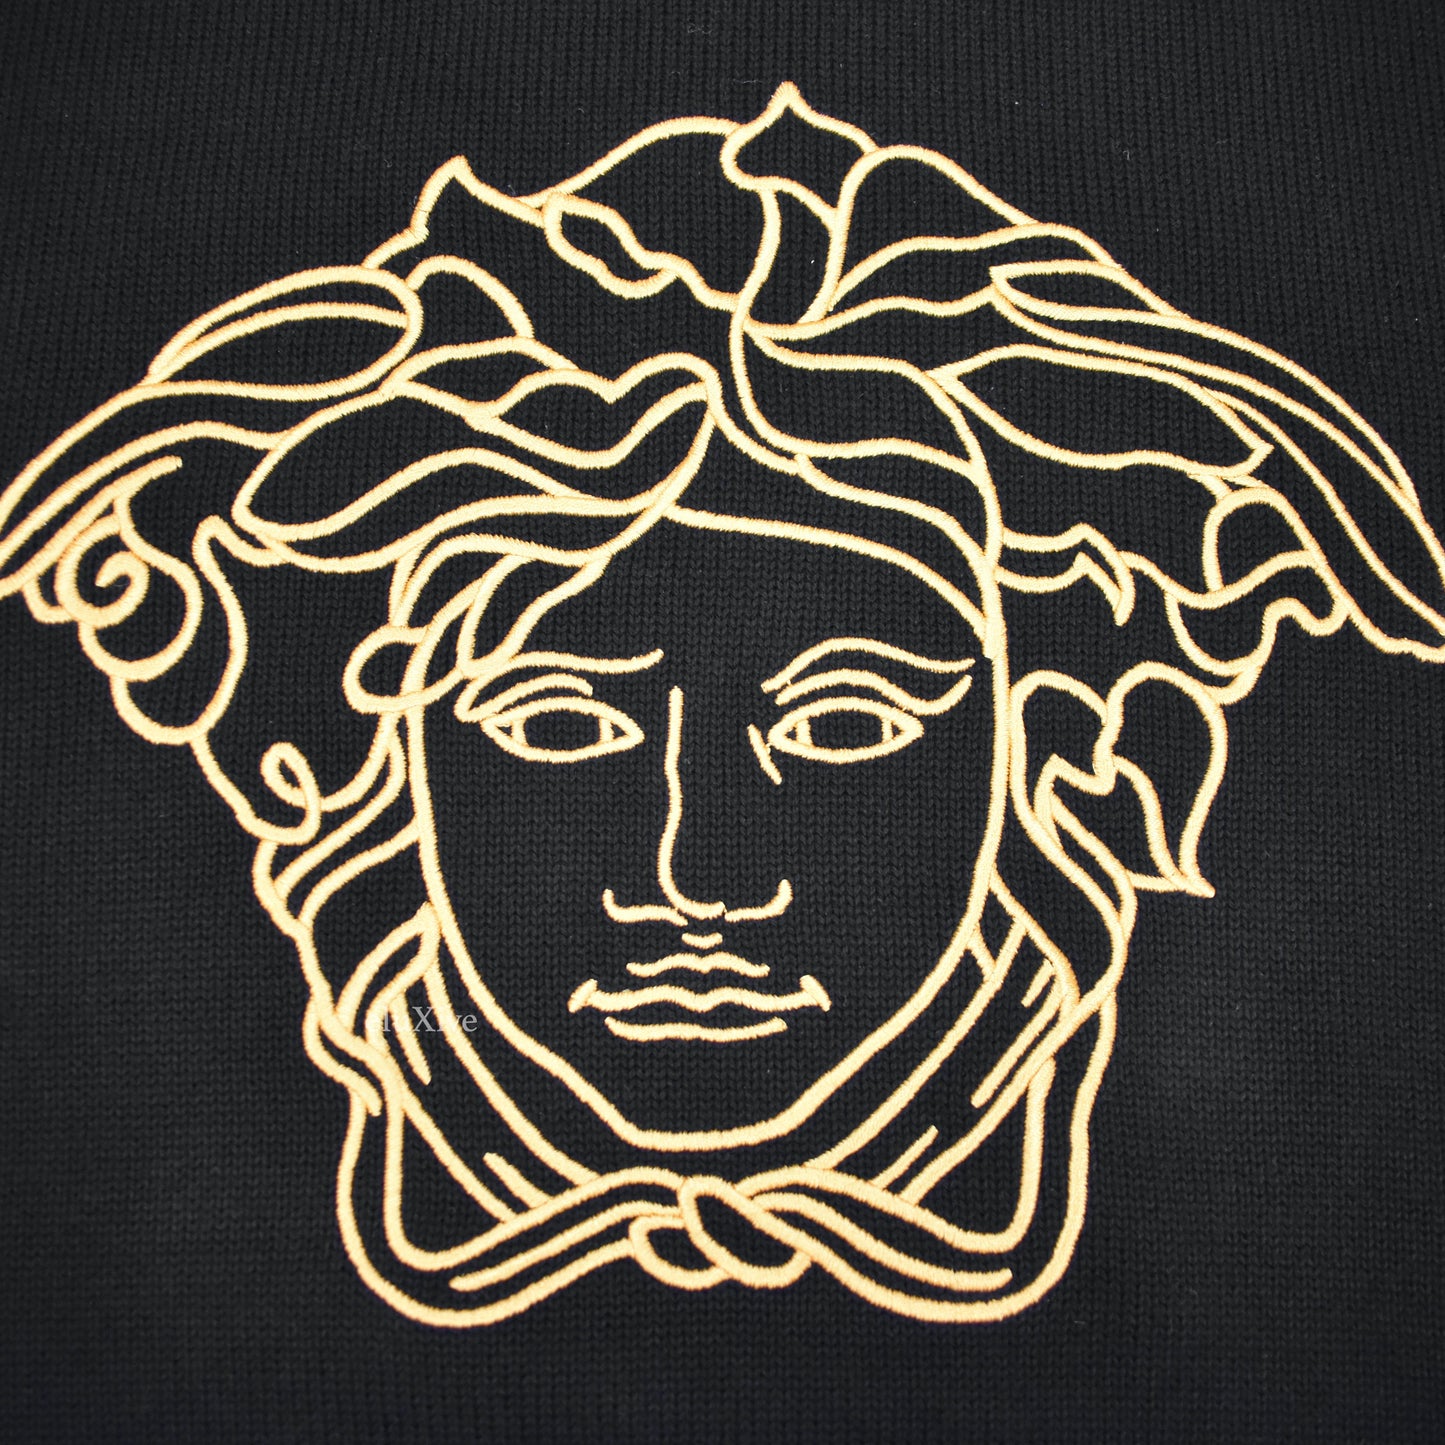 Versace - Gold Medusa Logo Embroidered Wool Sweater (Black)